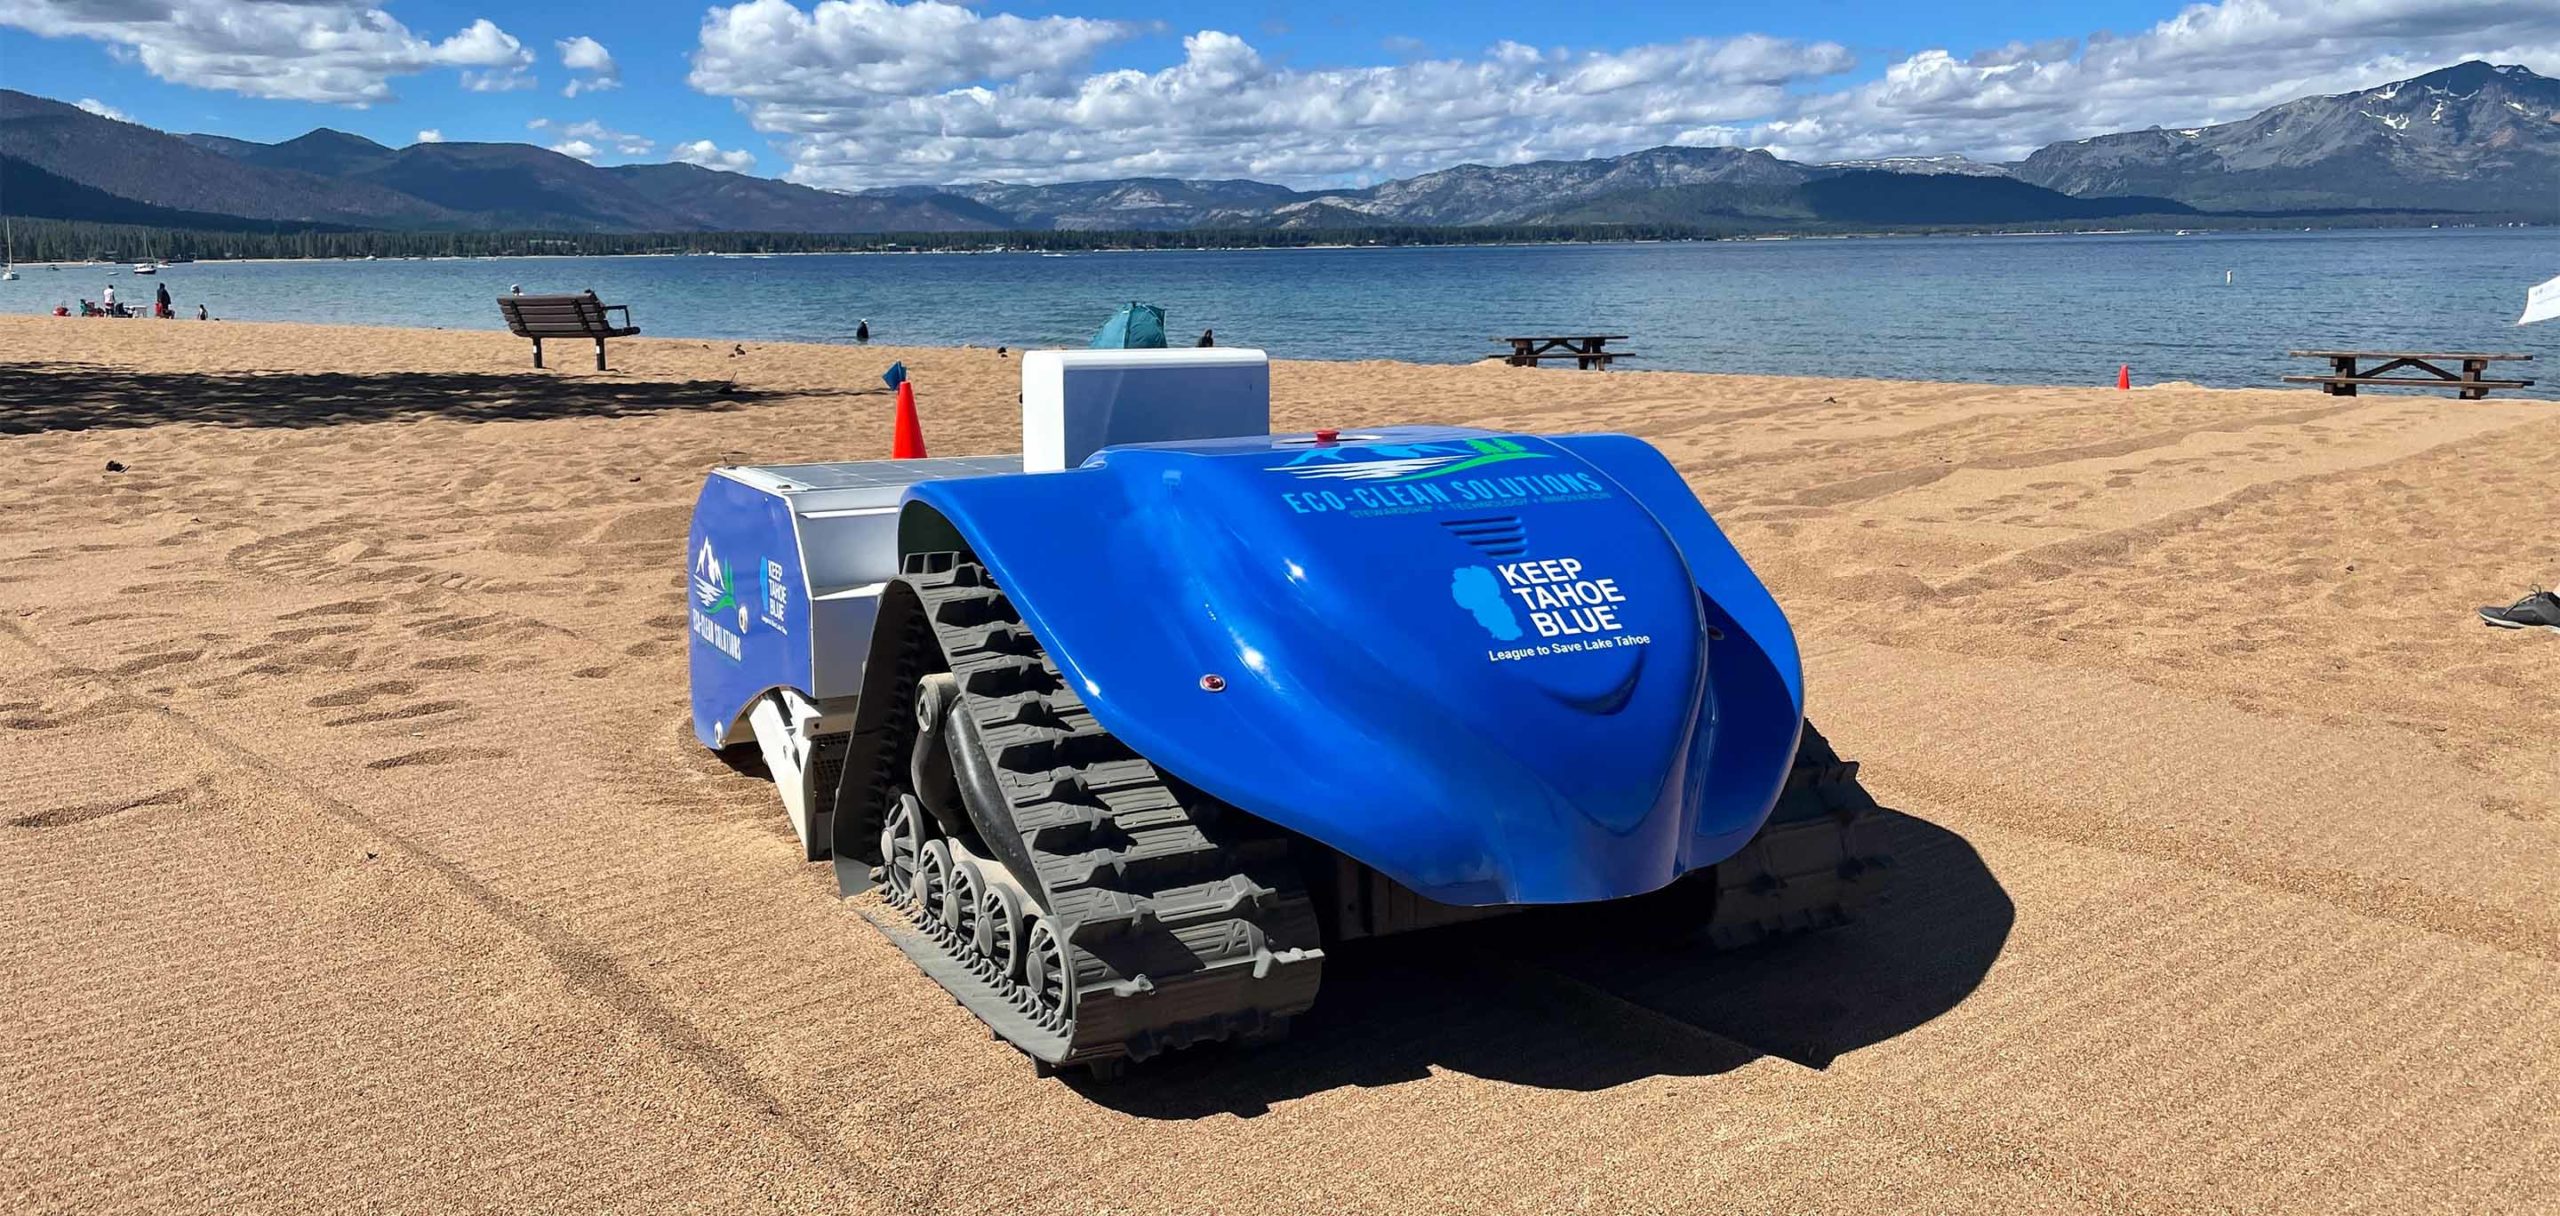 Beach-cleaning robot